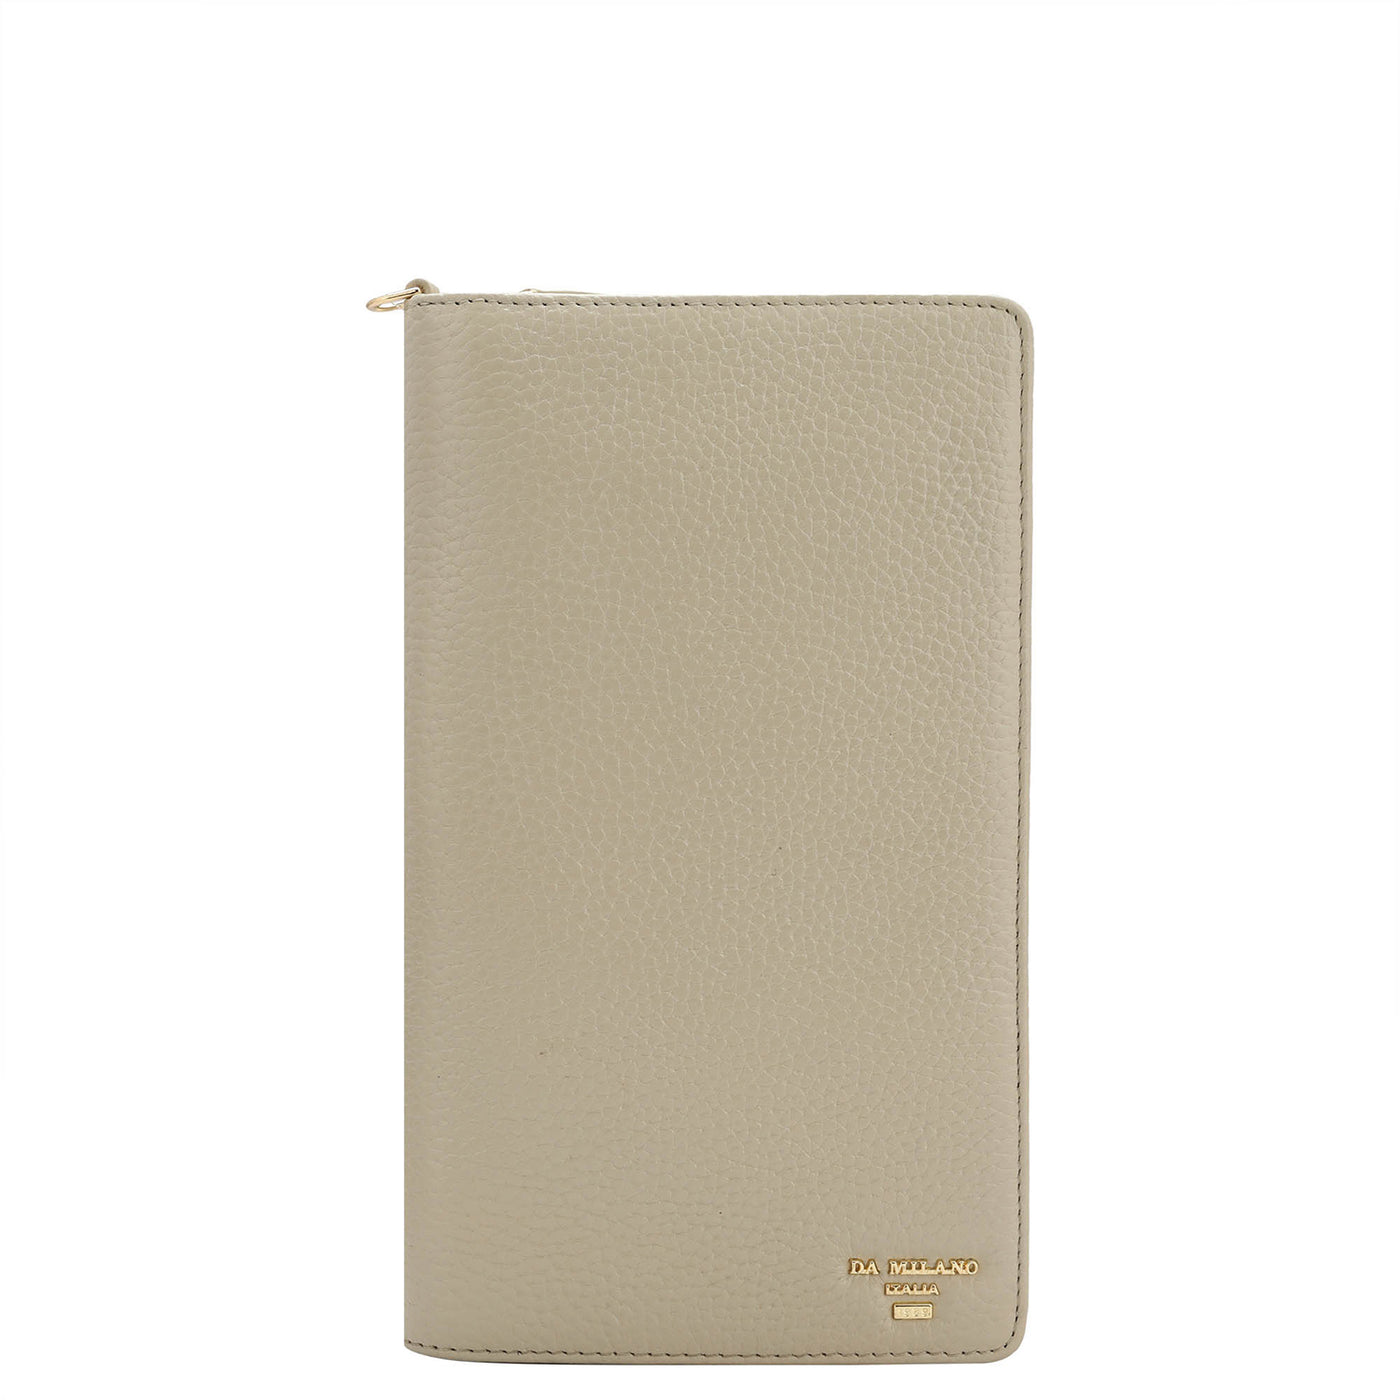 Wax Leather Passport Case - Ivory